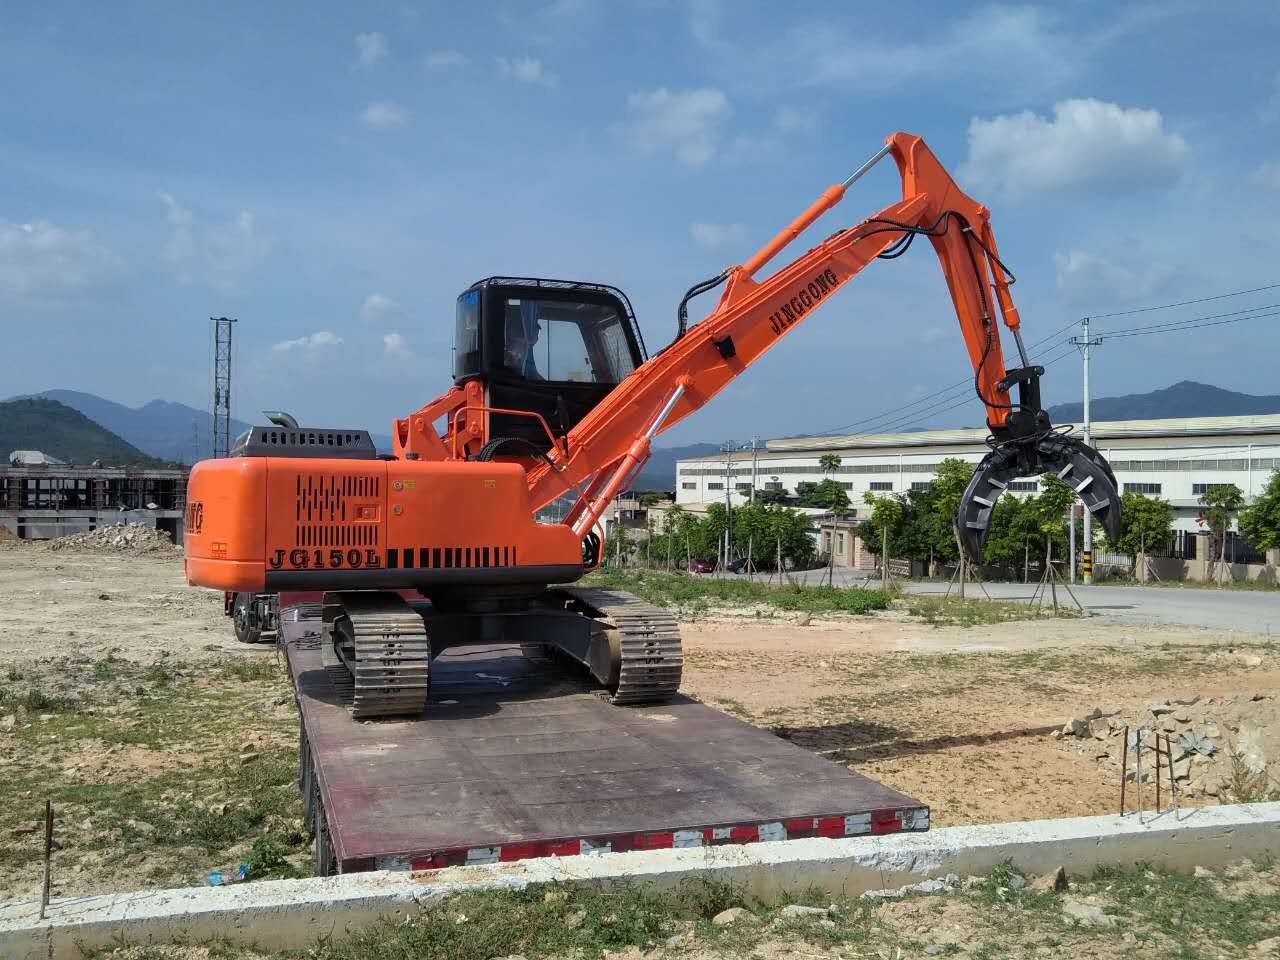 Excavator with Orange Peel Grapple for Grabing Metal Scraps